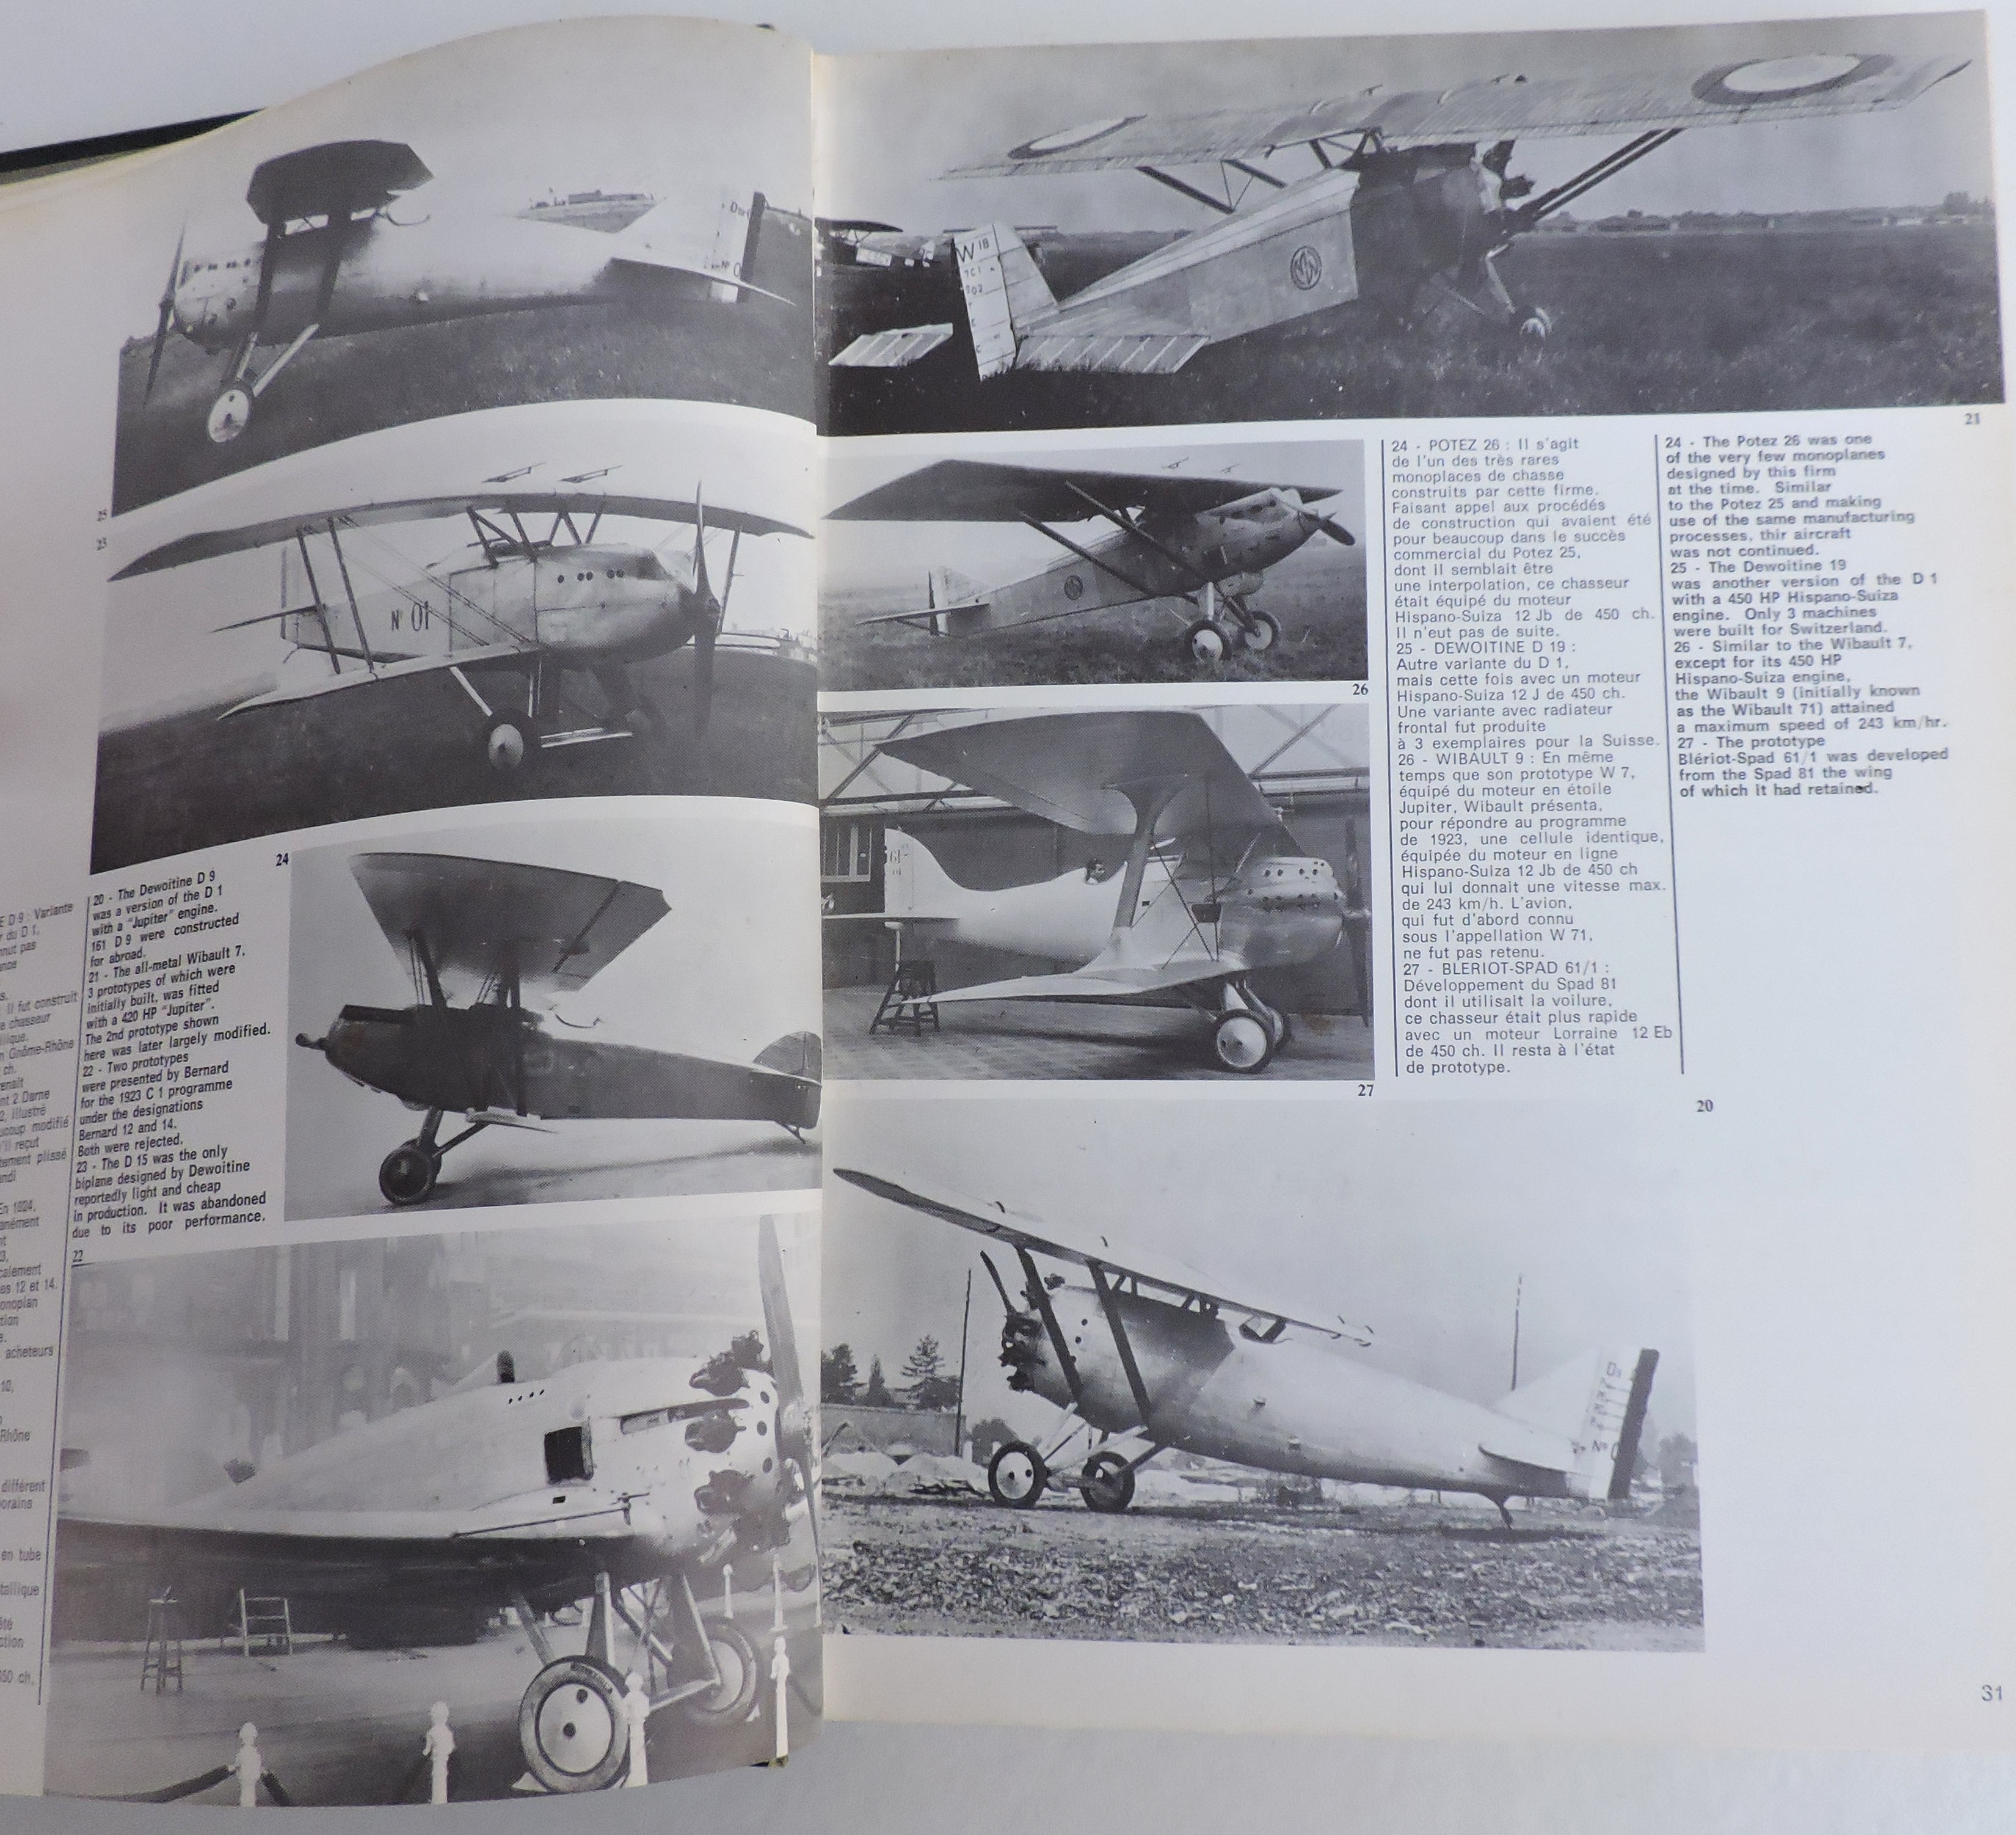 L&#039;aviation de chasse fran&ccedil;aise 1918 - 1940  Cuny &amp; Danel  Docavia N&deg;2